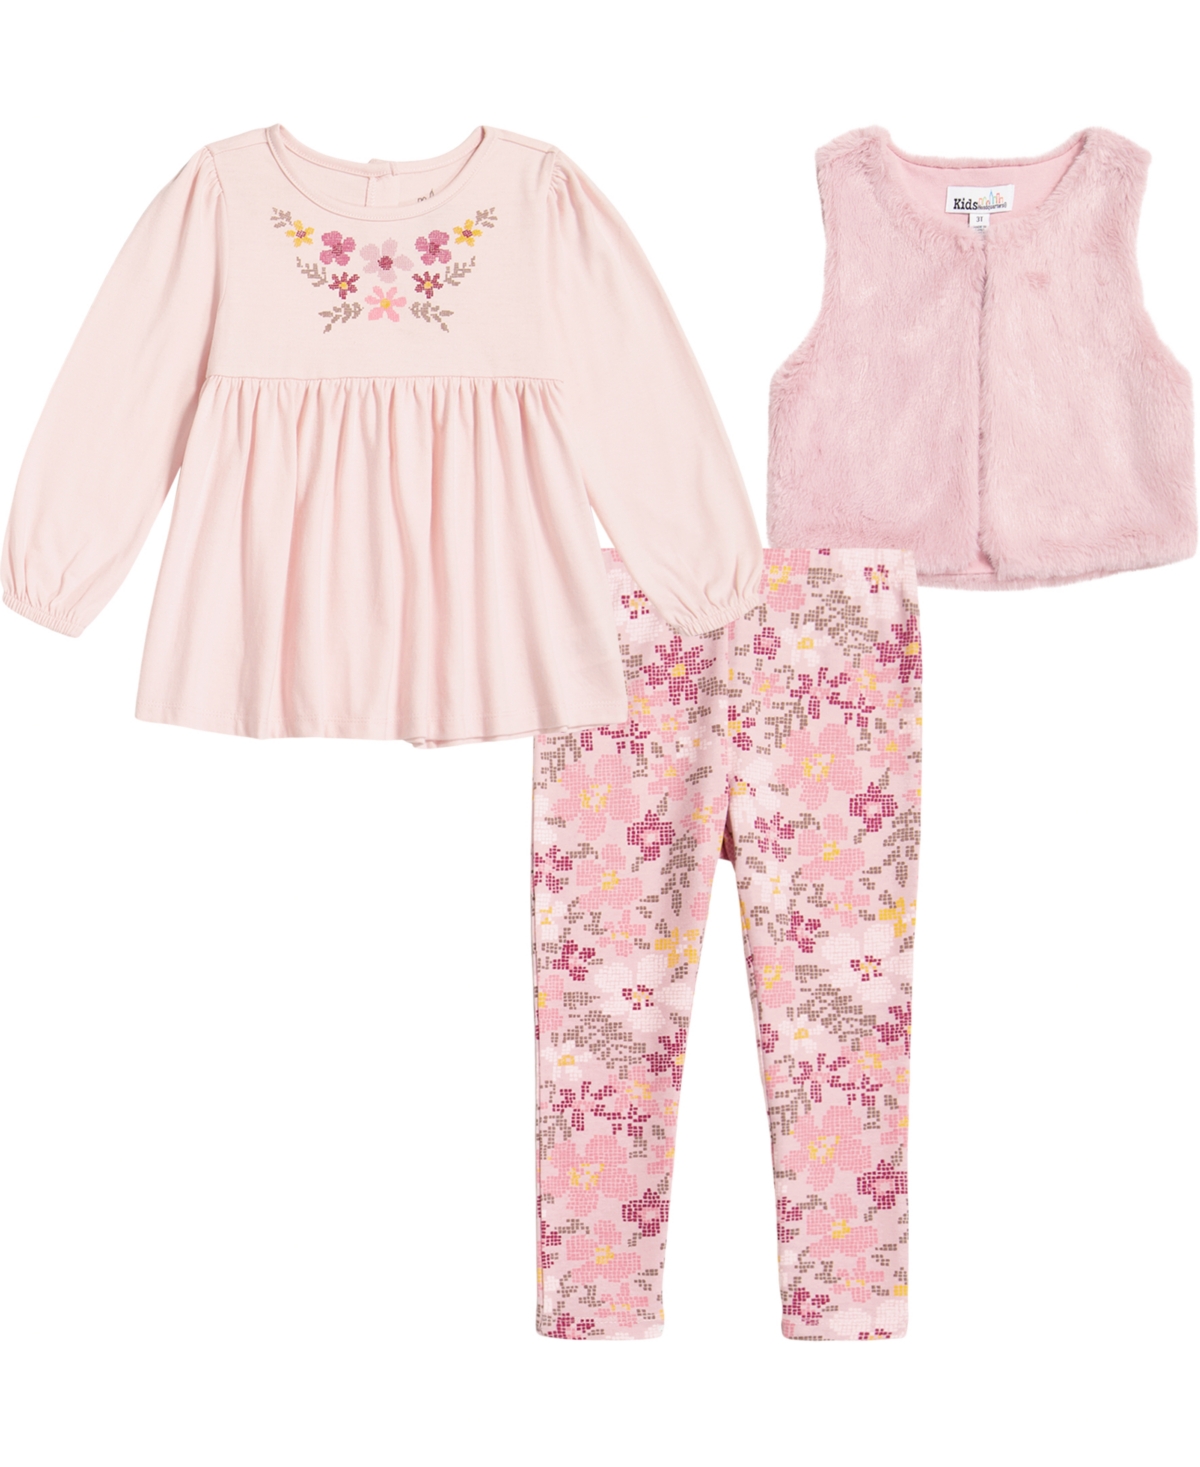 Kids Headquarters Toddler Girls Floral Peasant T-shirt, Faux Fur Vest And Big Floral Leggings, 3 Piece Set In Pink